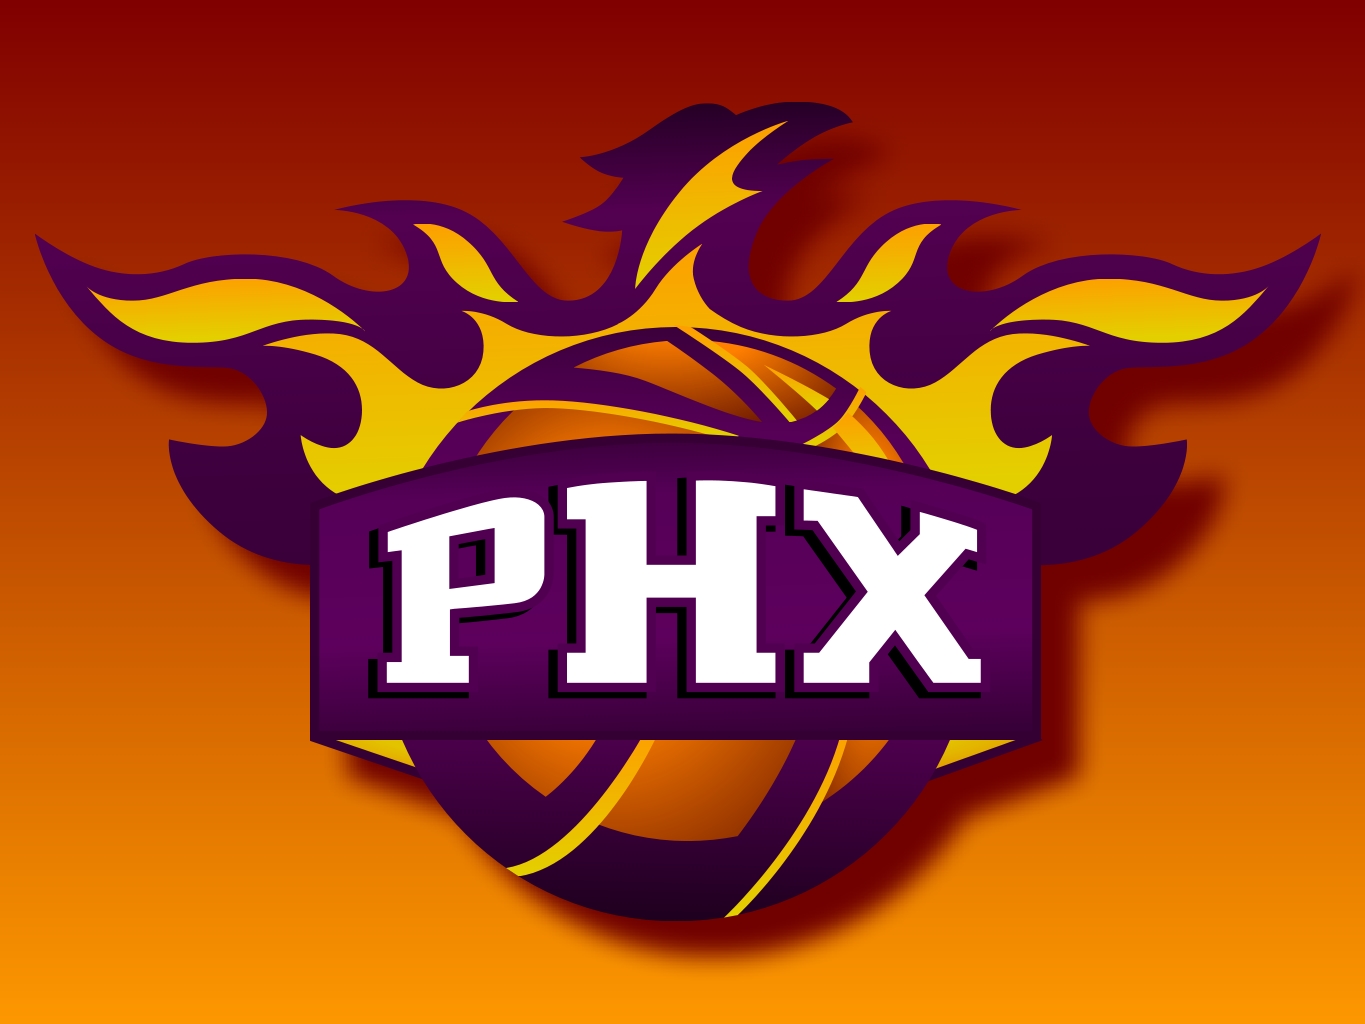 Wallpaper World: Professional Basketball Team 'Phoenix Suns'